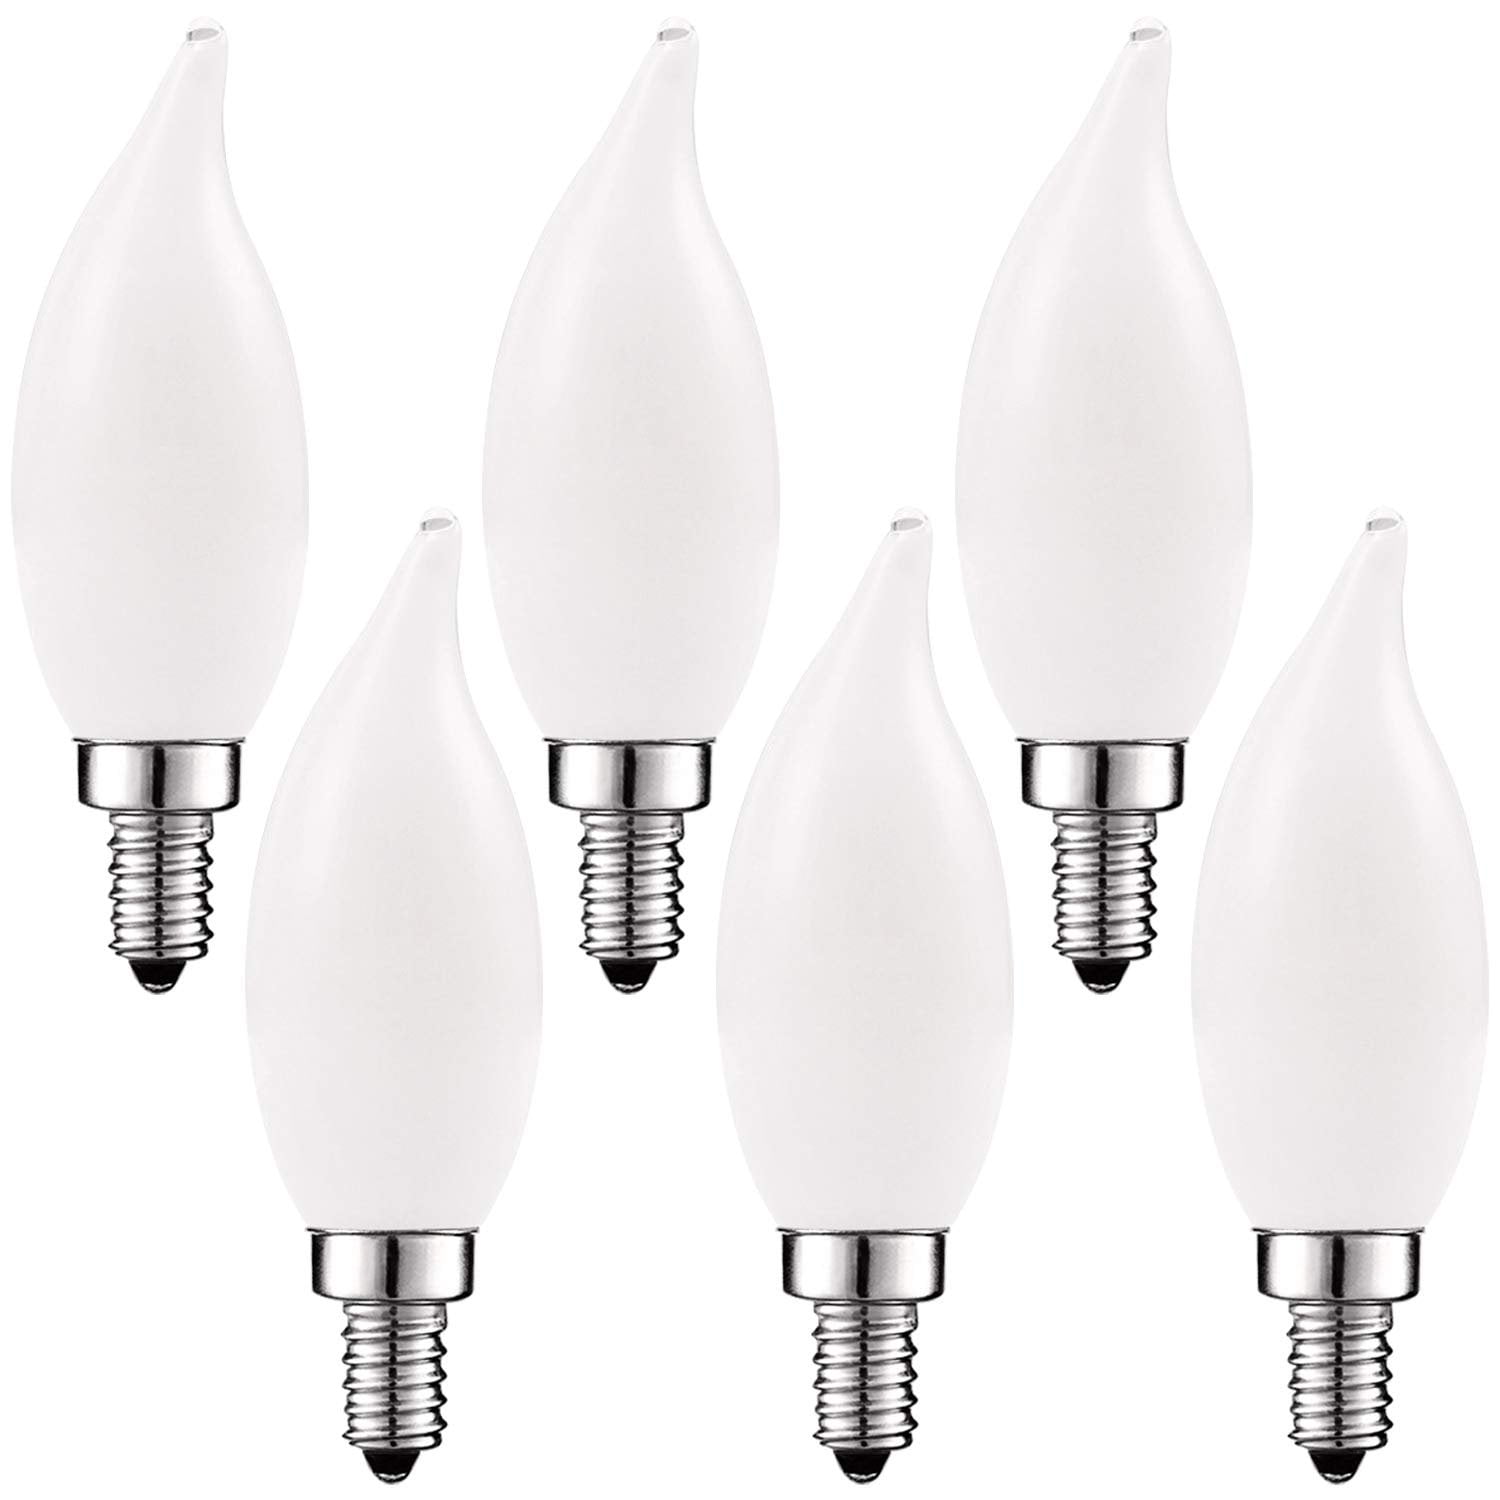 Dimmable Led Candelabra Light Bulb B11 E12 2700K Warm White 60W Equivalent 6Pack 